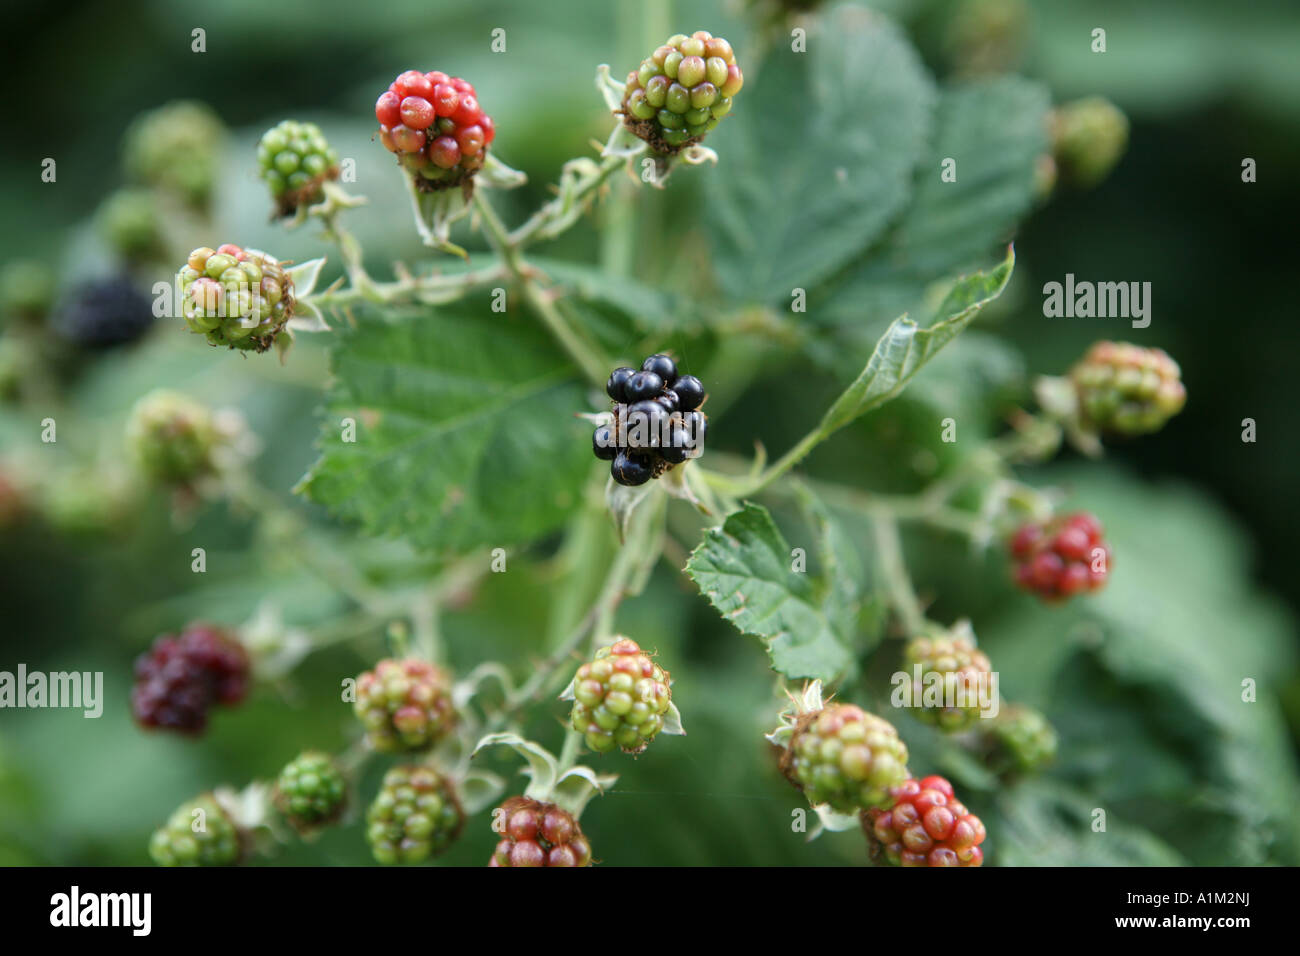 Mixture of ripe and unripe blackberries on brambles Stock Photo